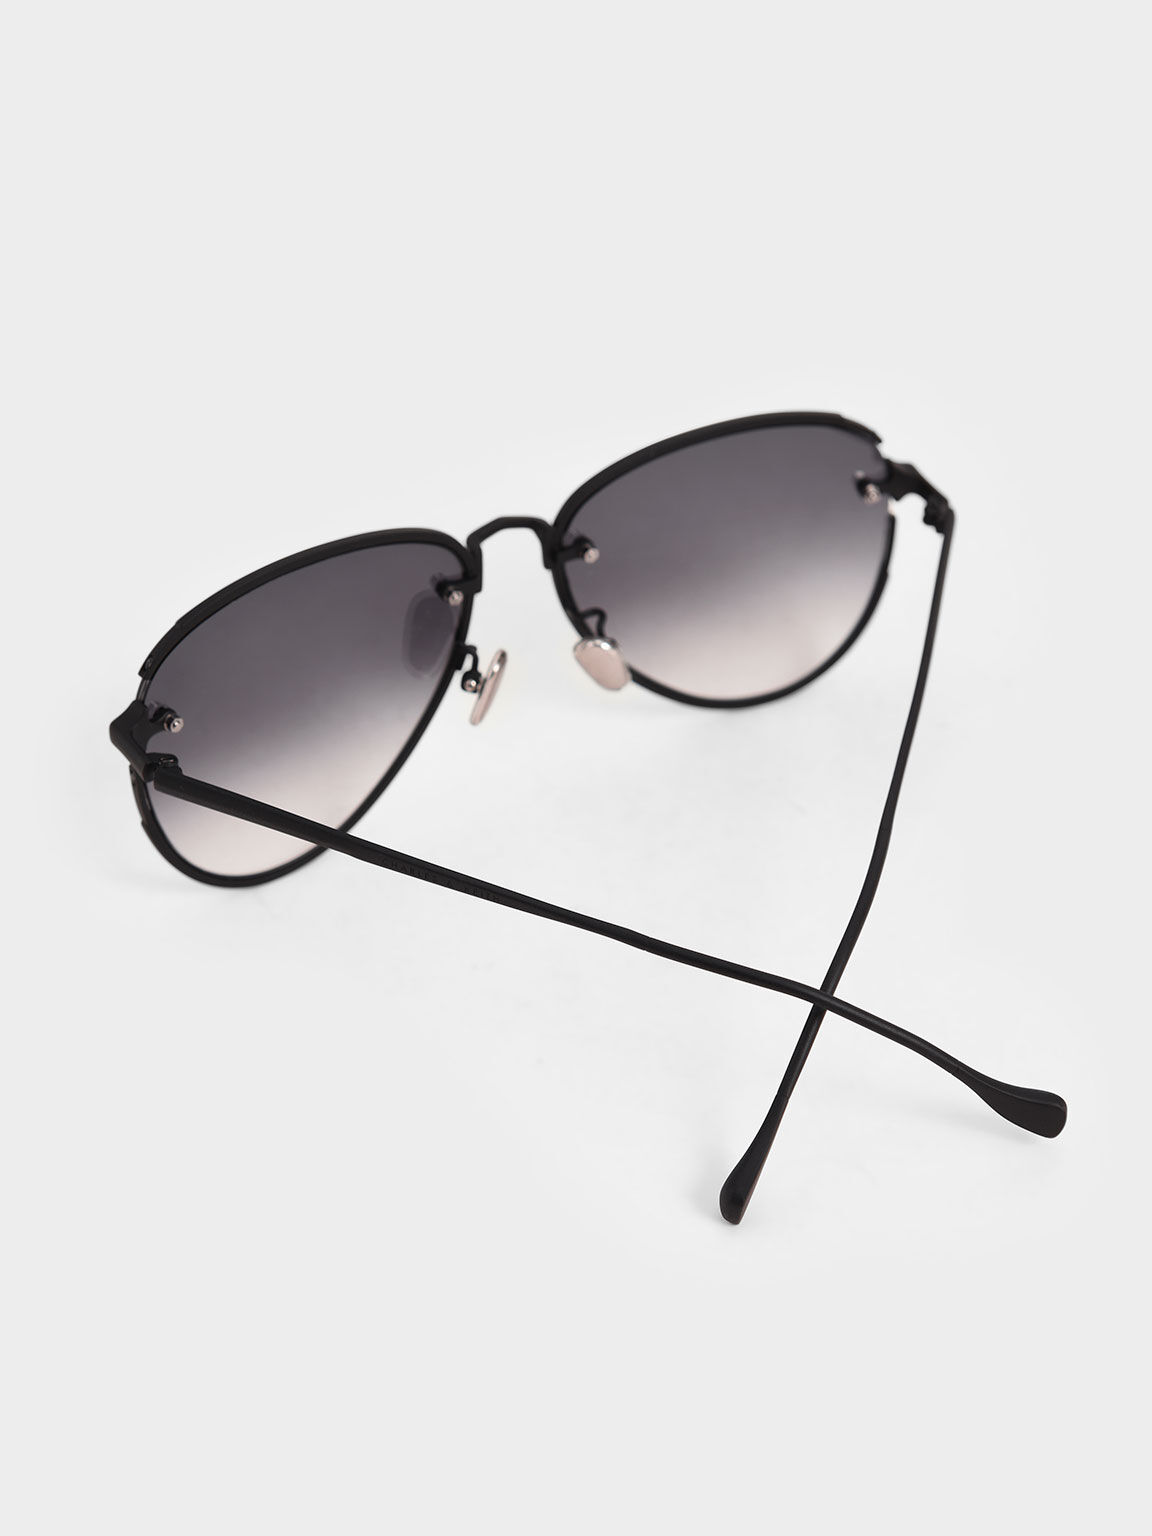 Tinted Aviator Sunglasses, Black, hi-res